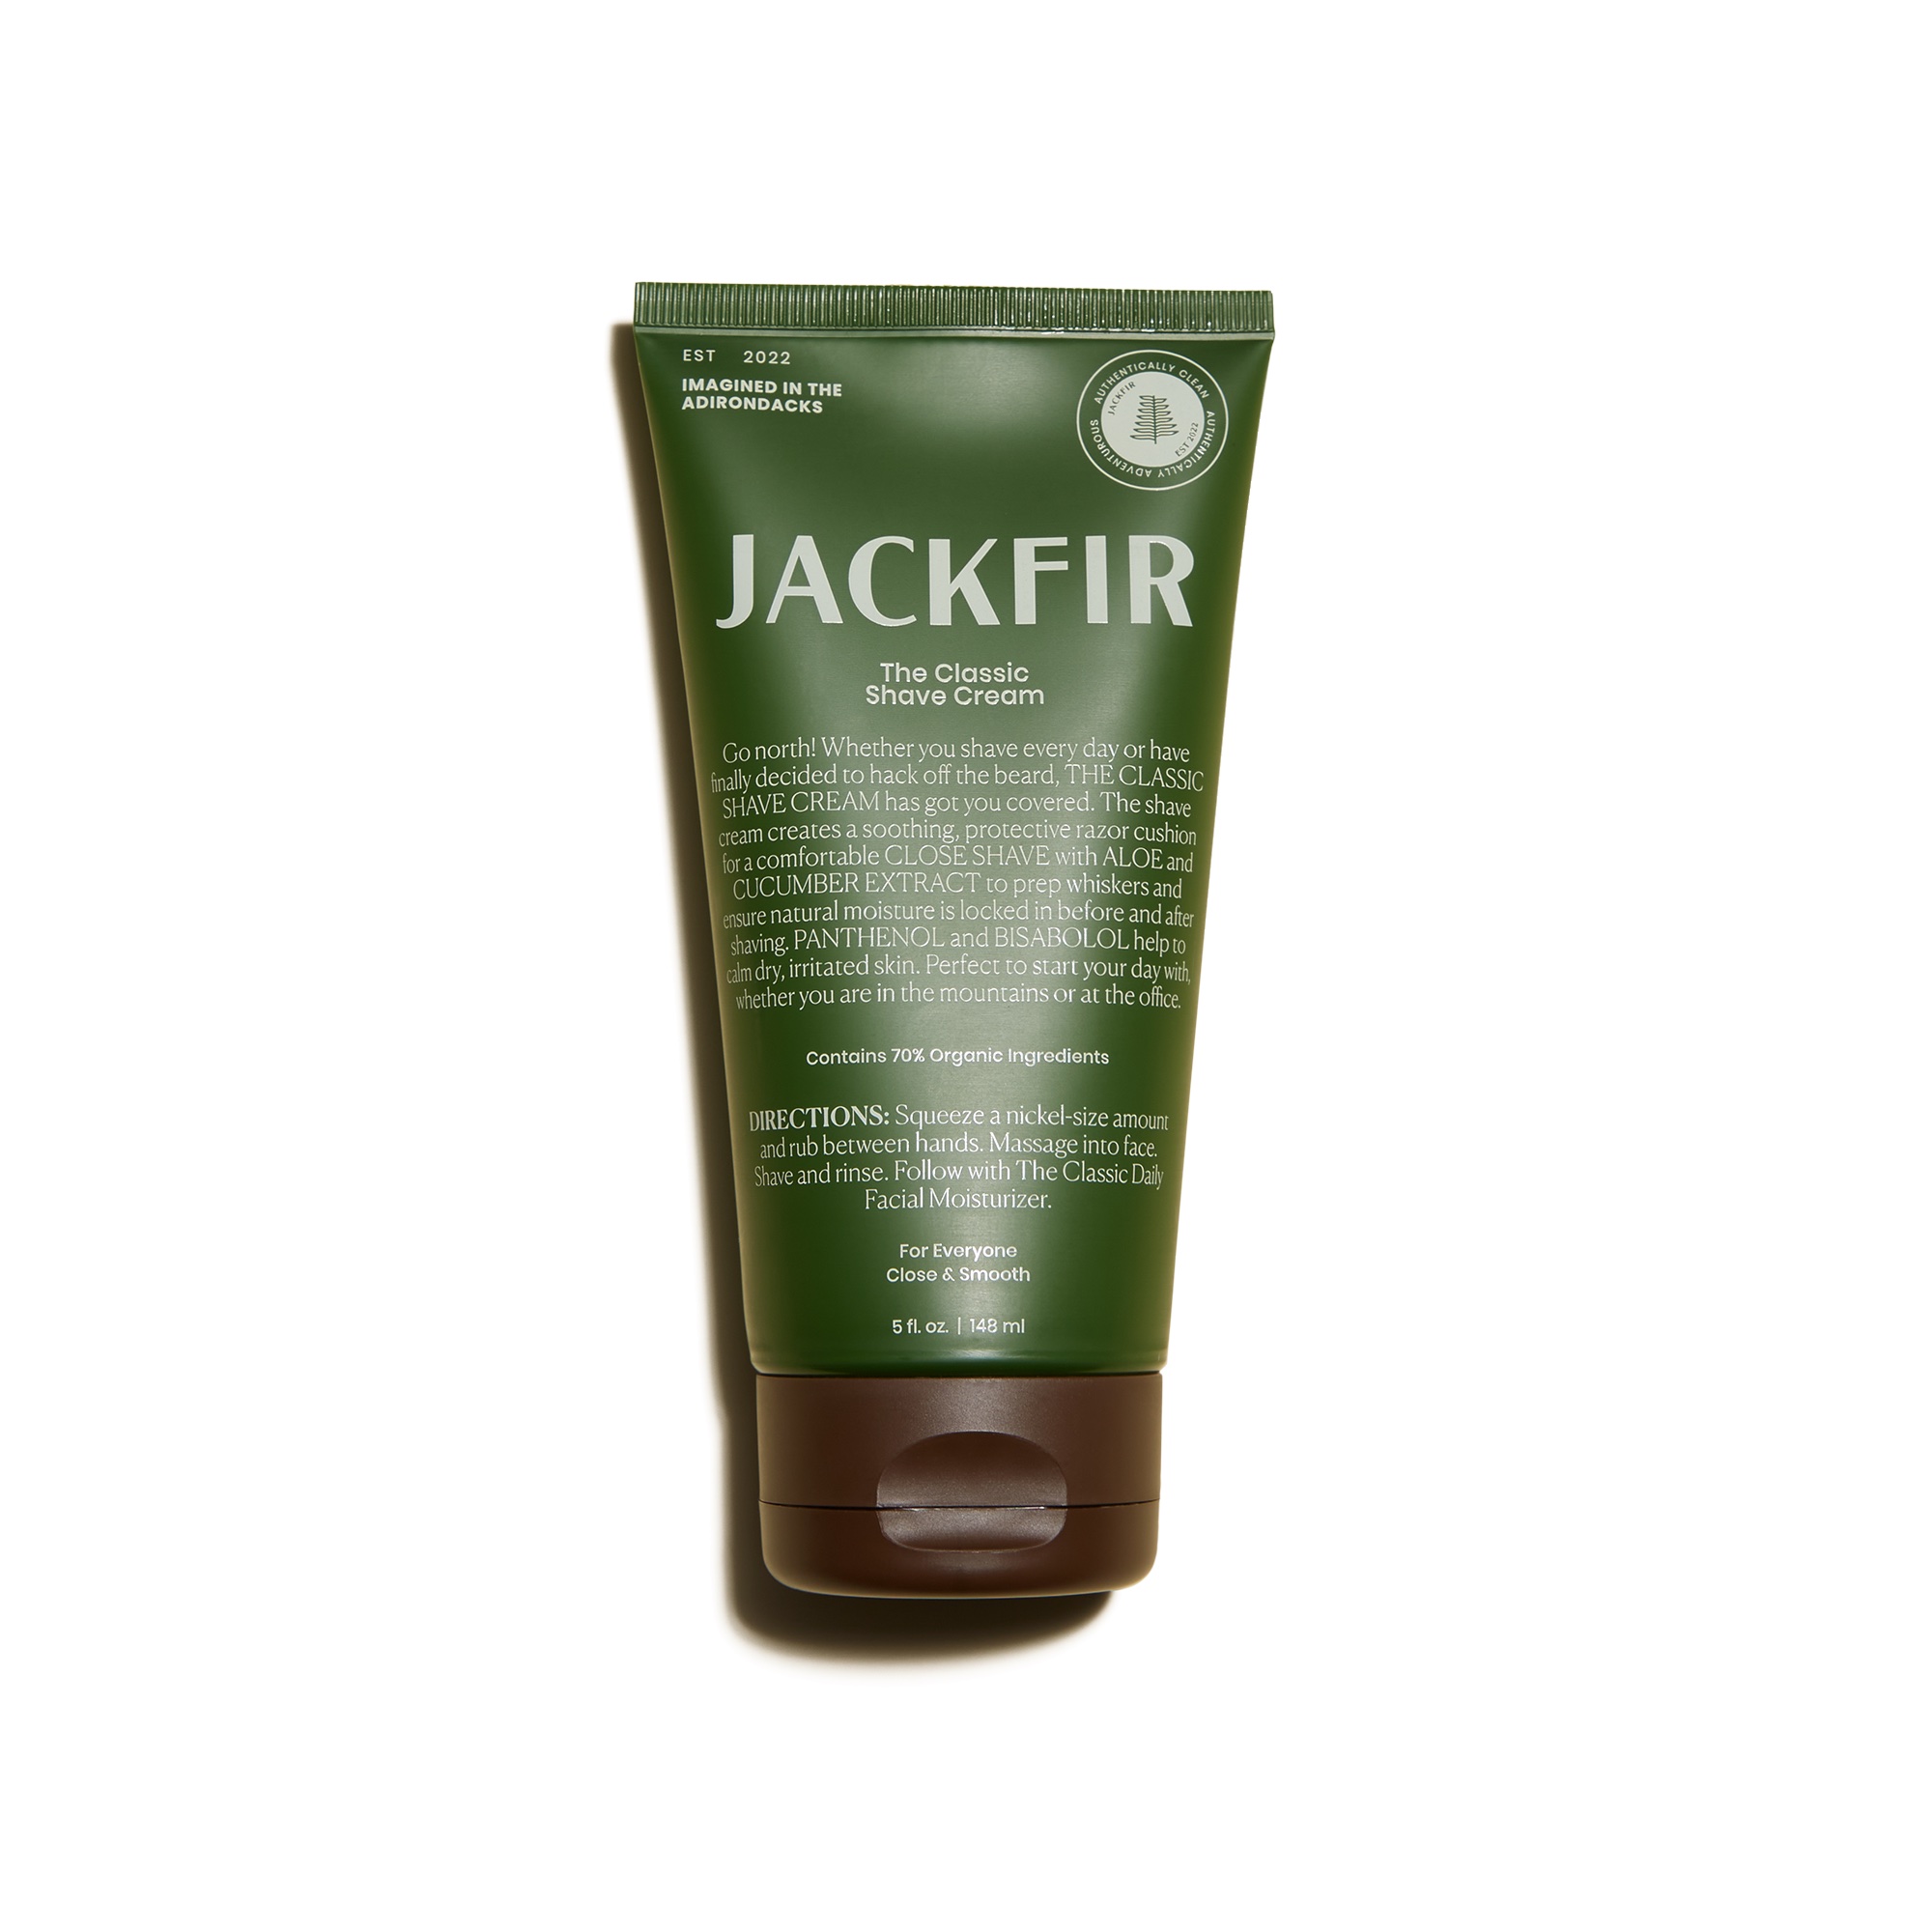 JACKFIR The Classic Shave Cream